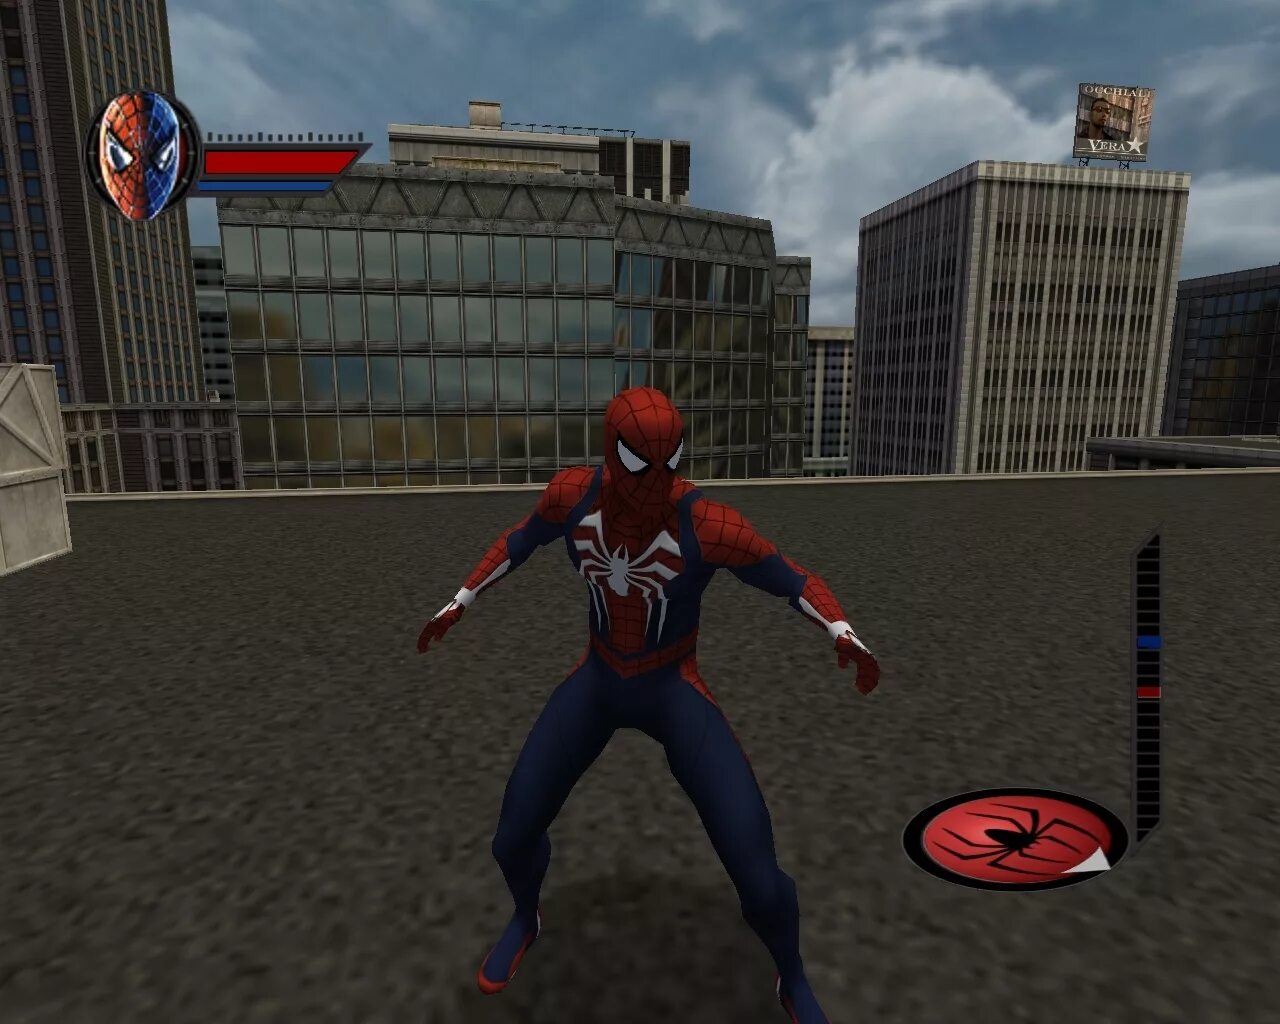 Spider-man (игра, 2000). Человек паук 2002 игра. Spider man 1 игра. Spider man ps1. Spider man 2 1.1 2